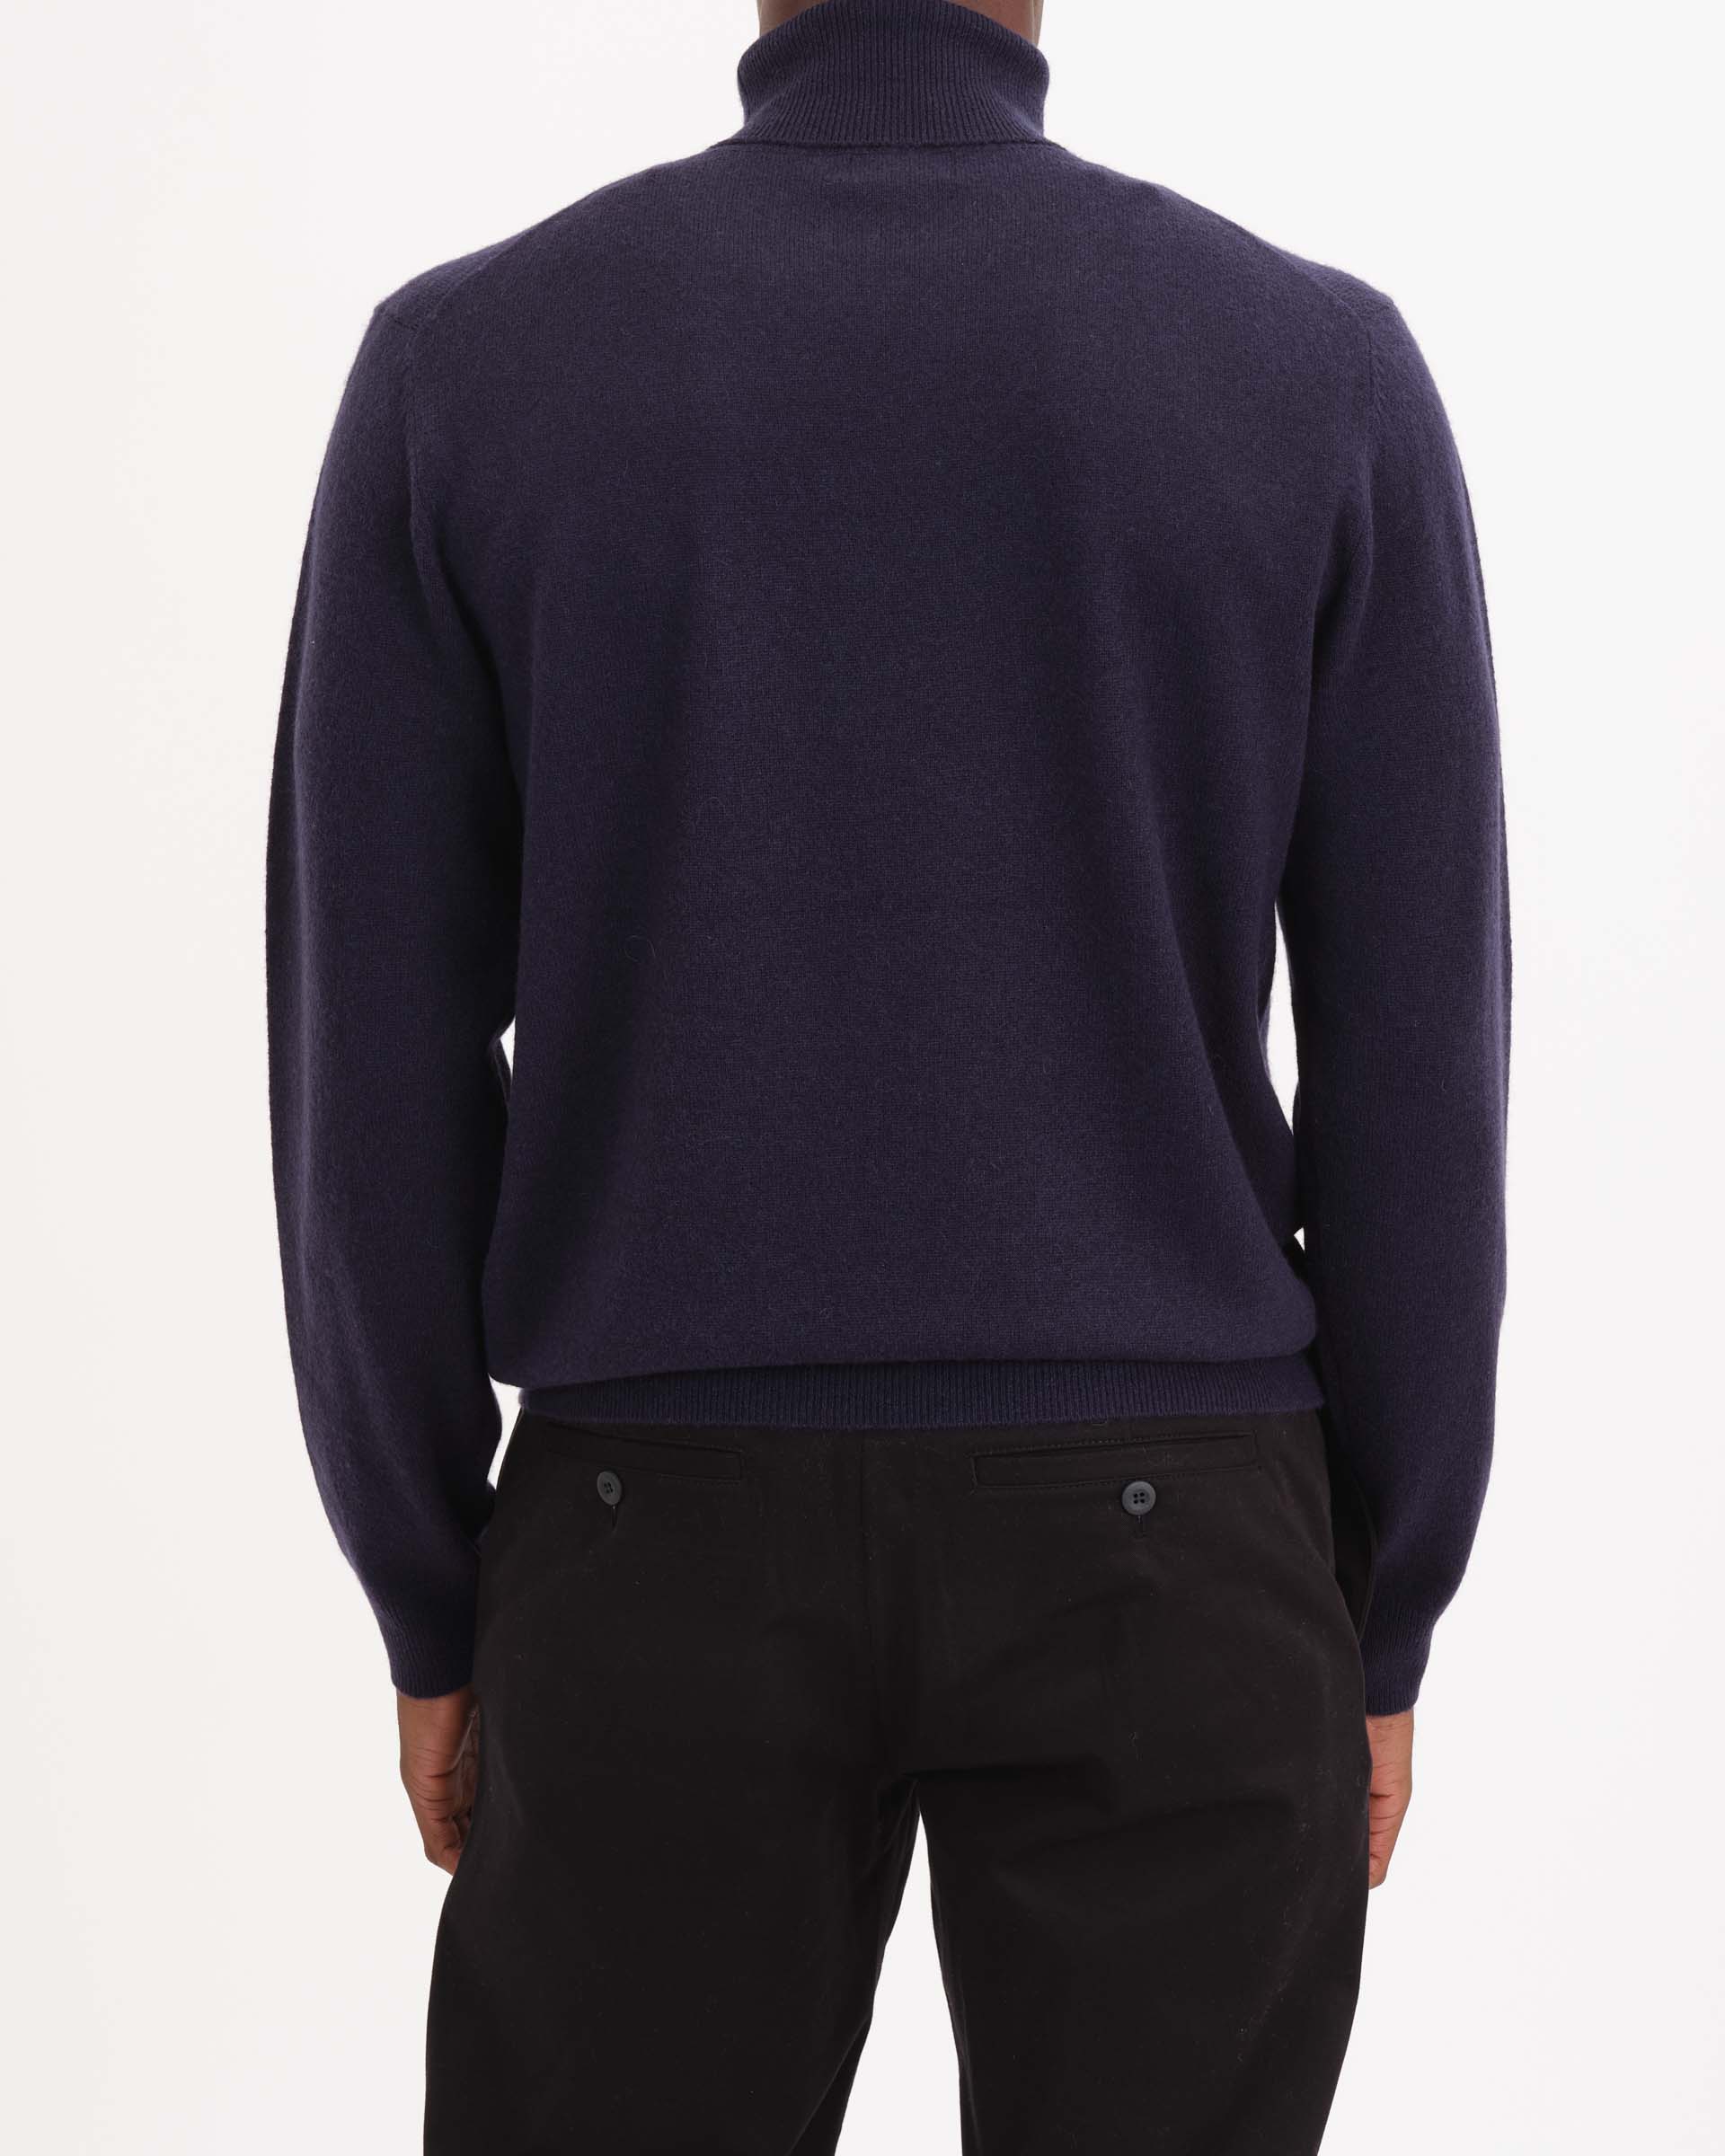 Shop Men's Cashmere Rib Trim Turtleneck Sweater | Magaschoni Men's | JANE + MERCER